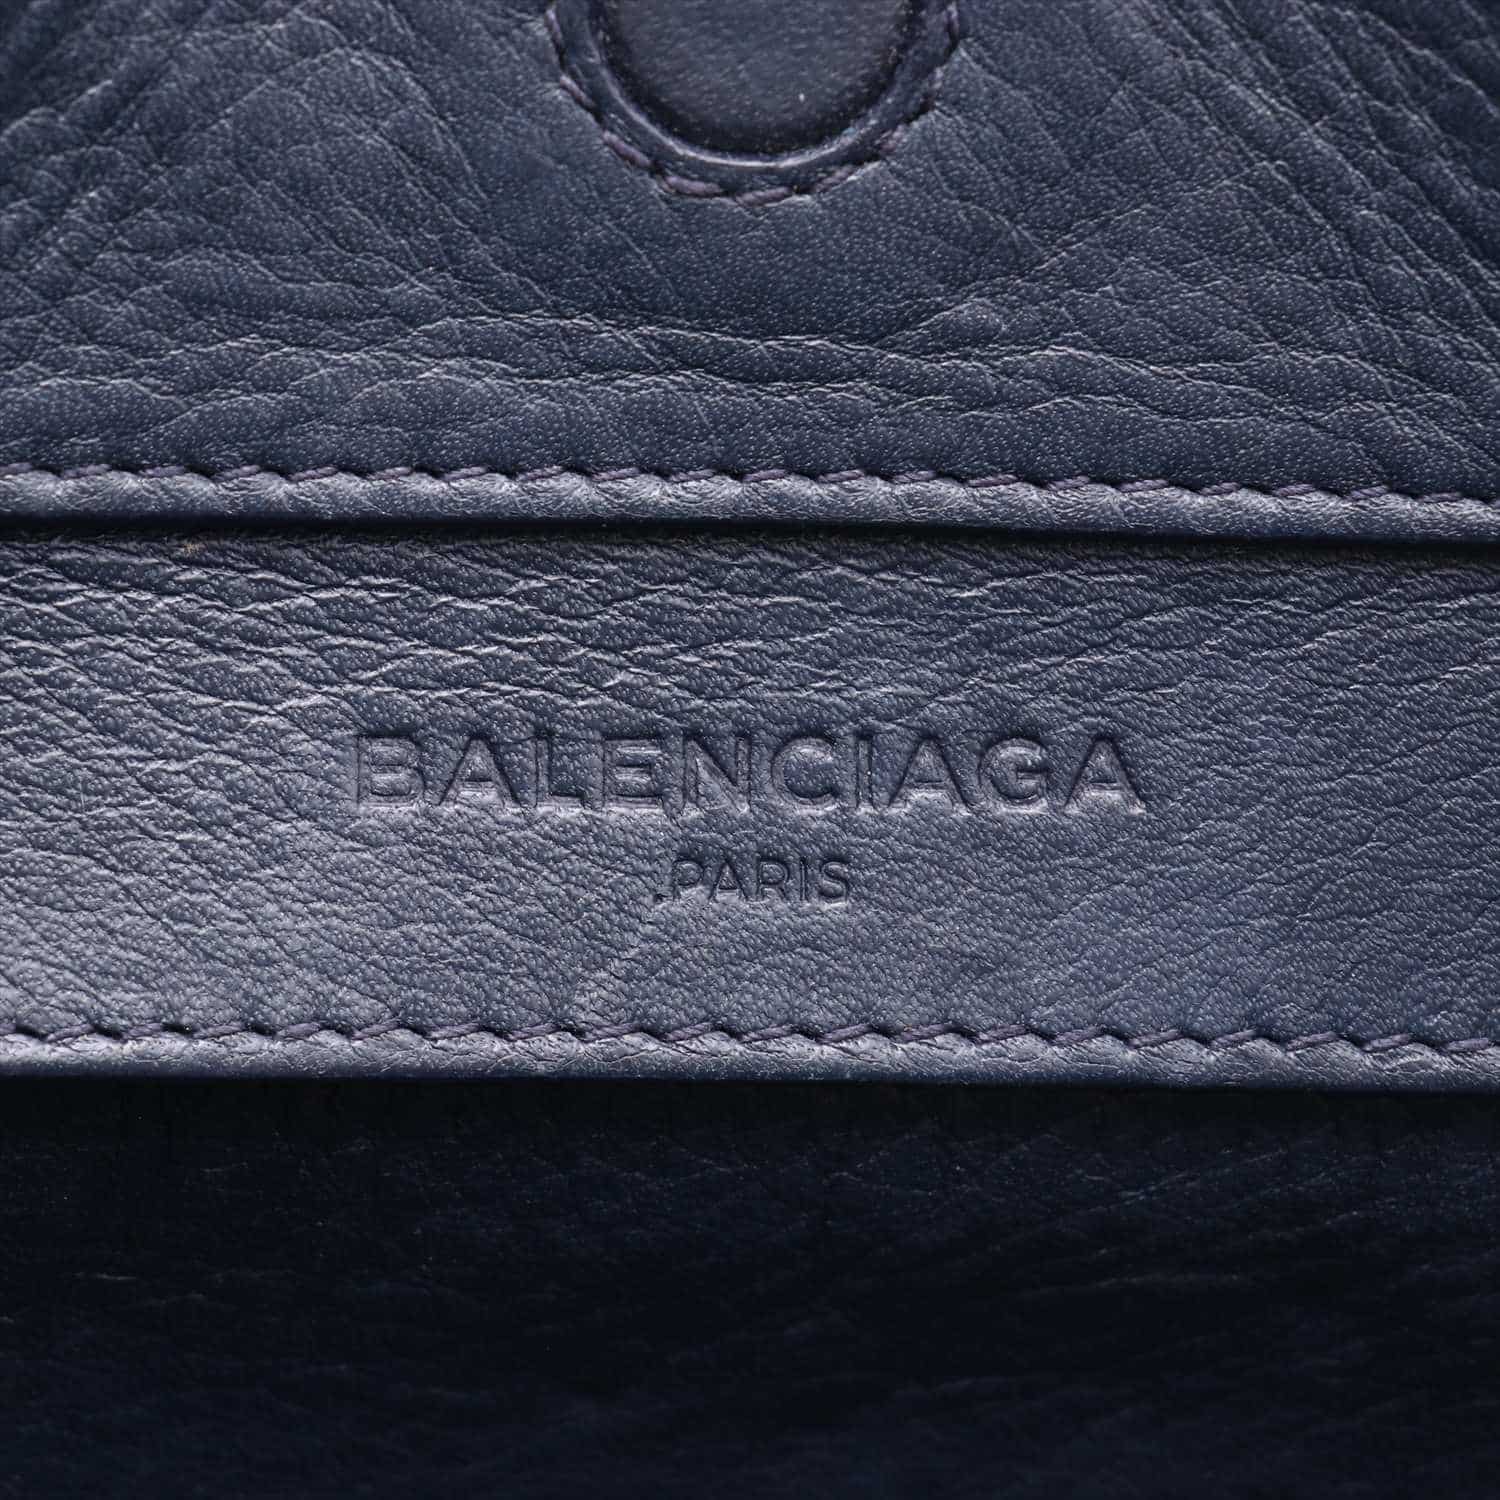 Balenciaga Papier Mini Leather 2way handbag Navy blue 370926